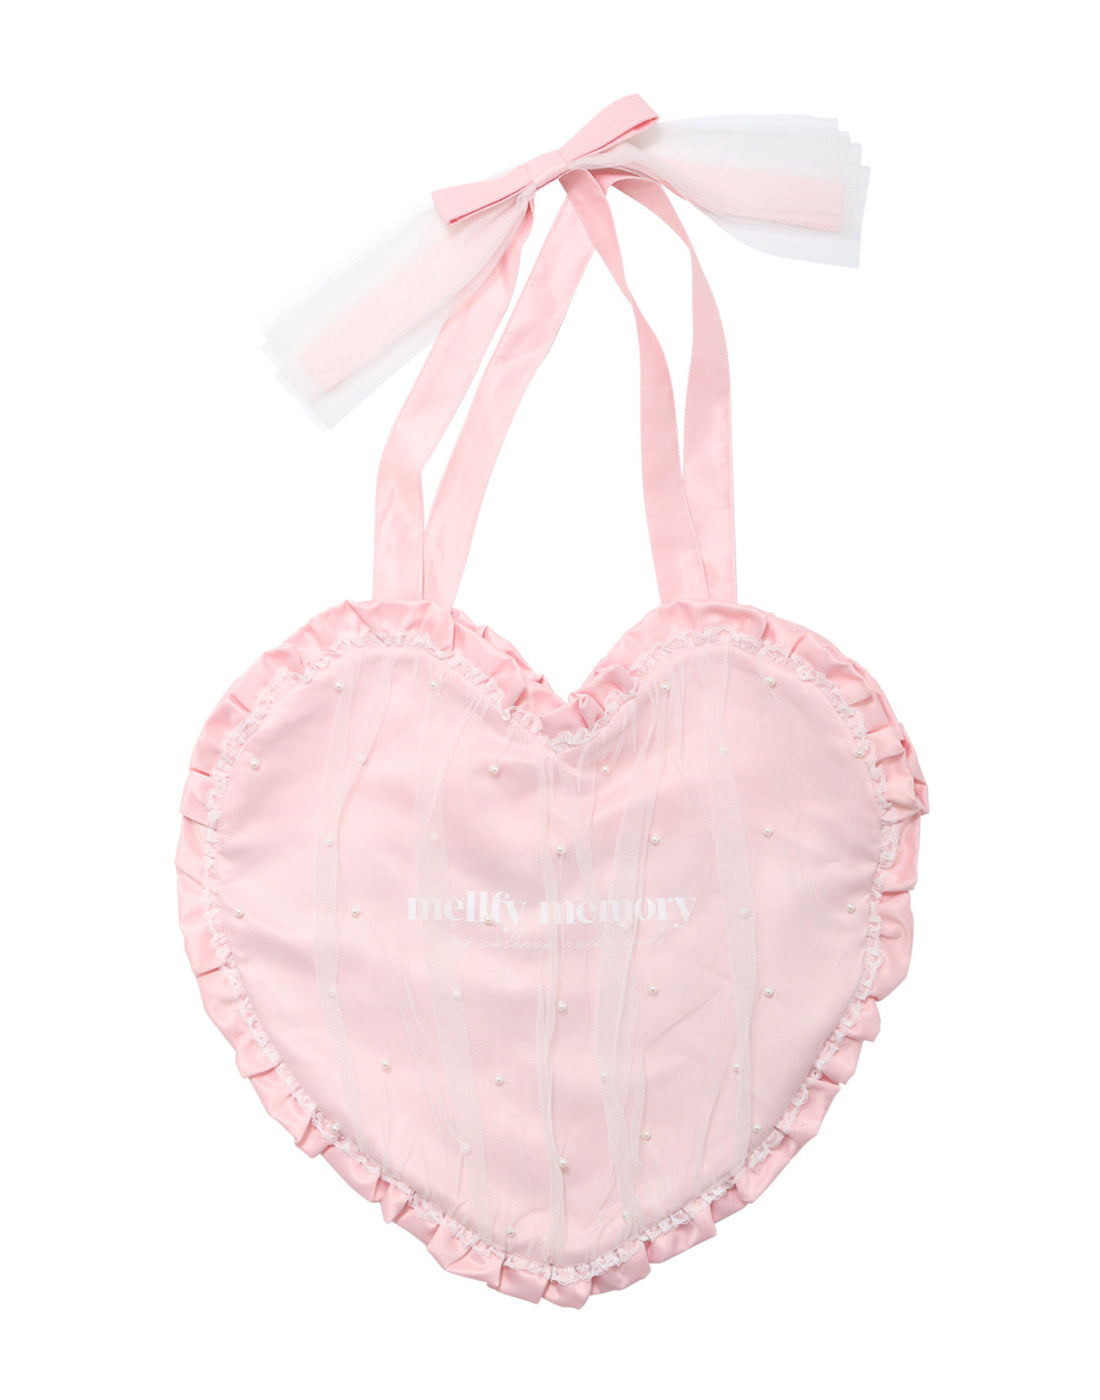 Heart of love Bag